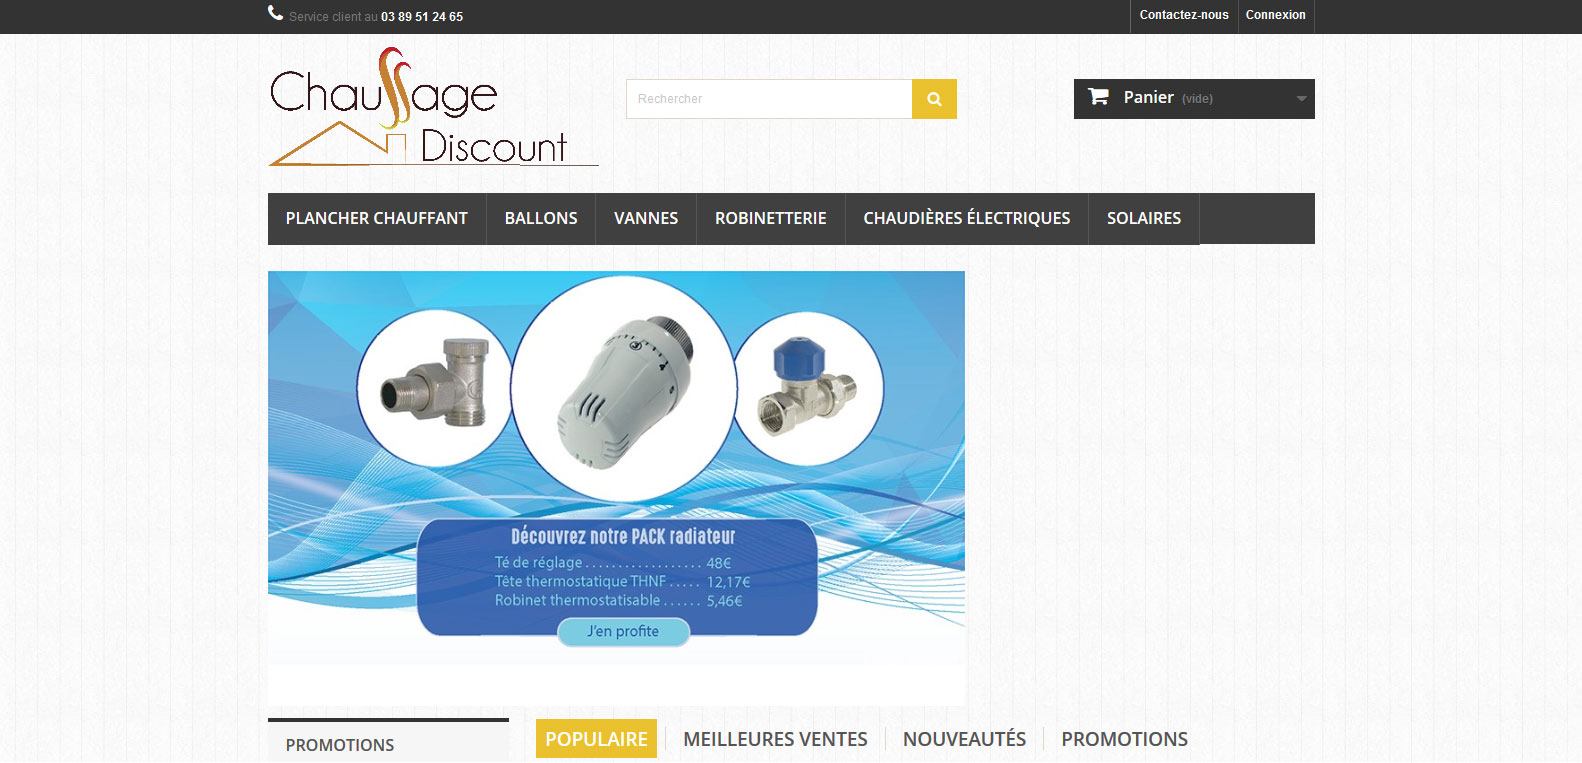 Chauffage discount, client Karedess agency, agence web depuis 2006 à Mulhouse